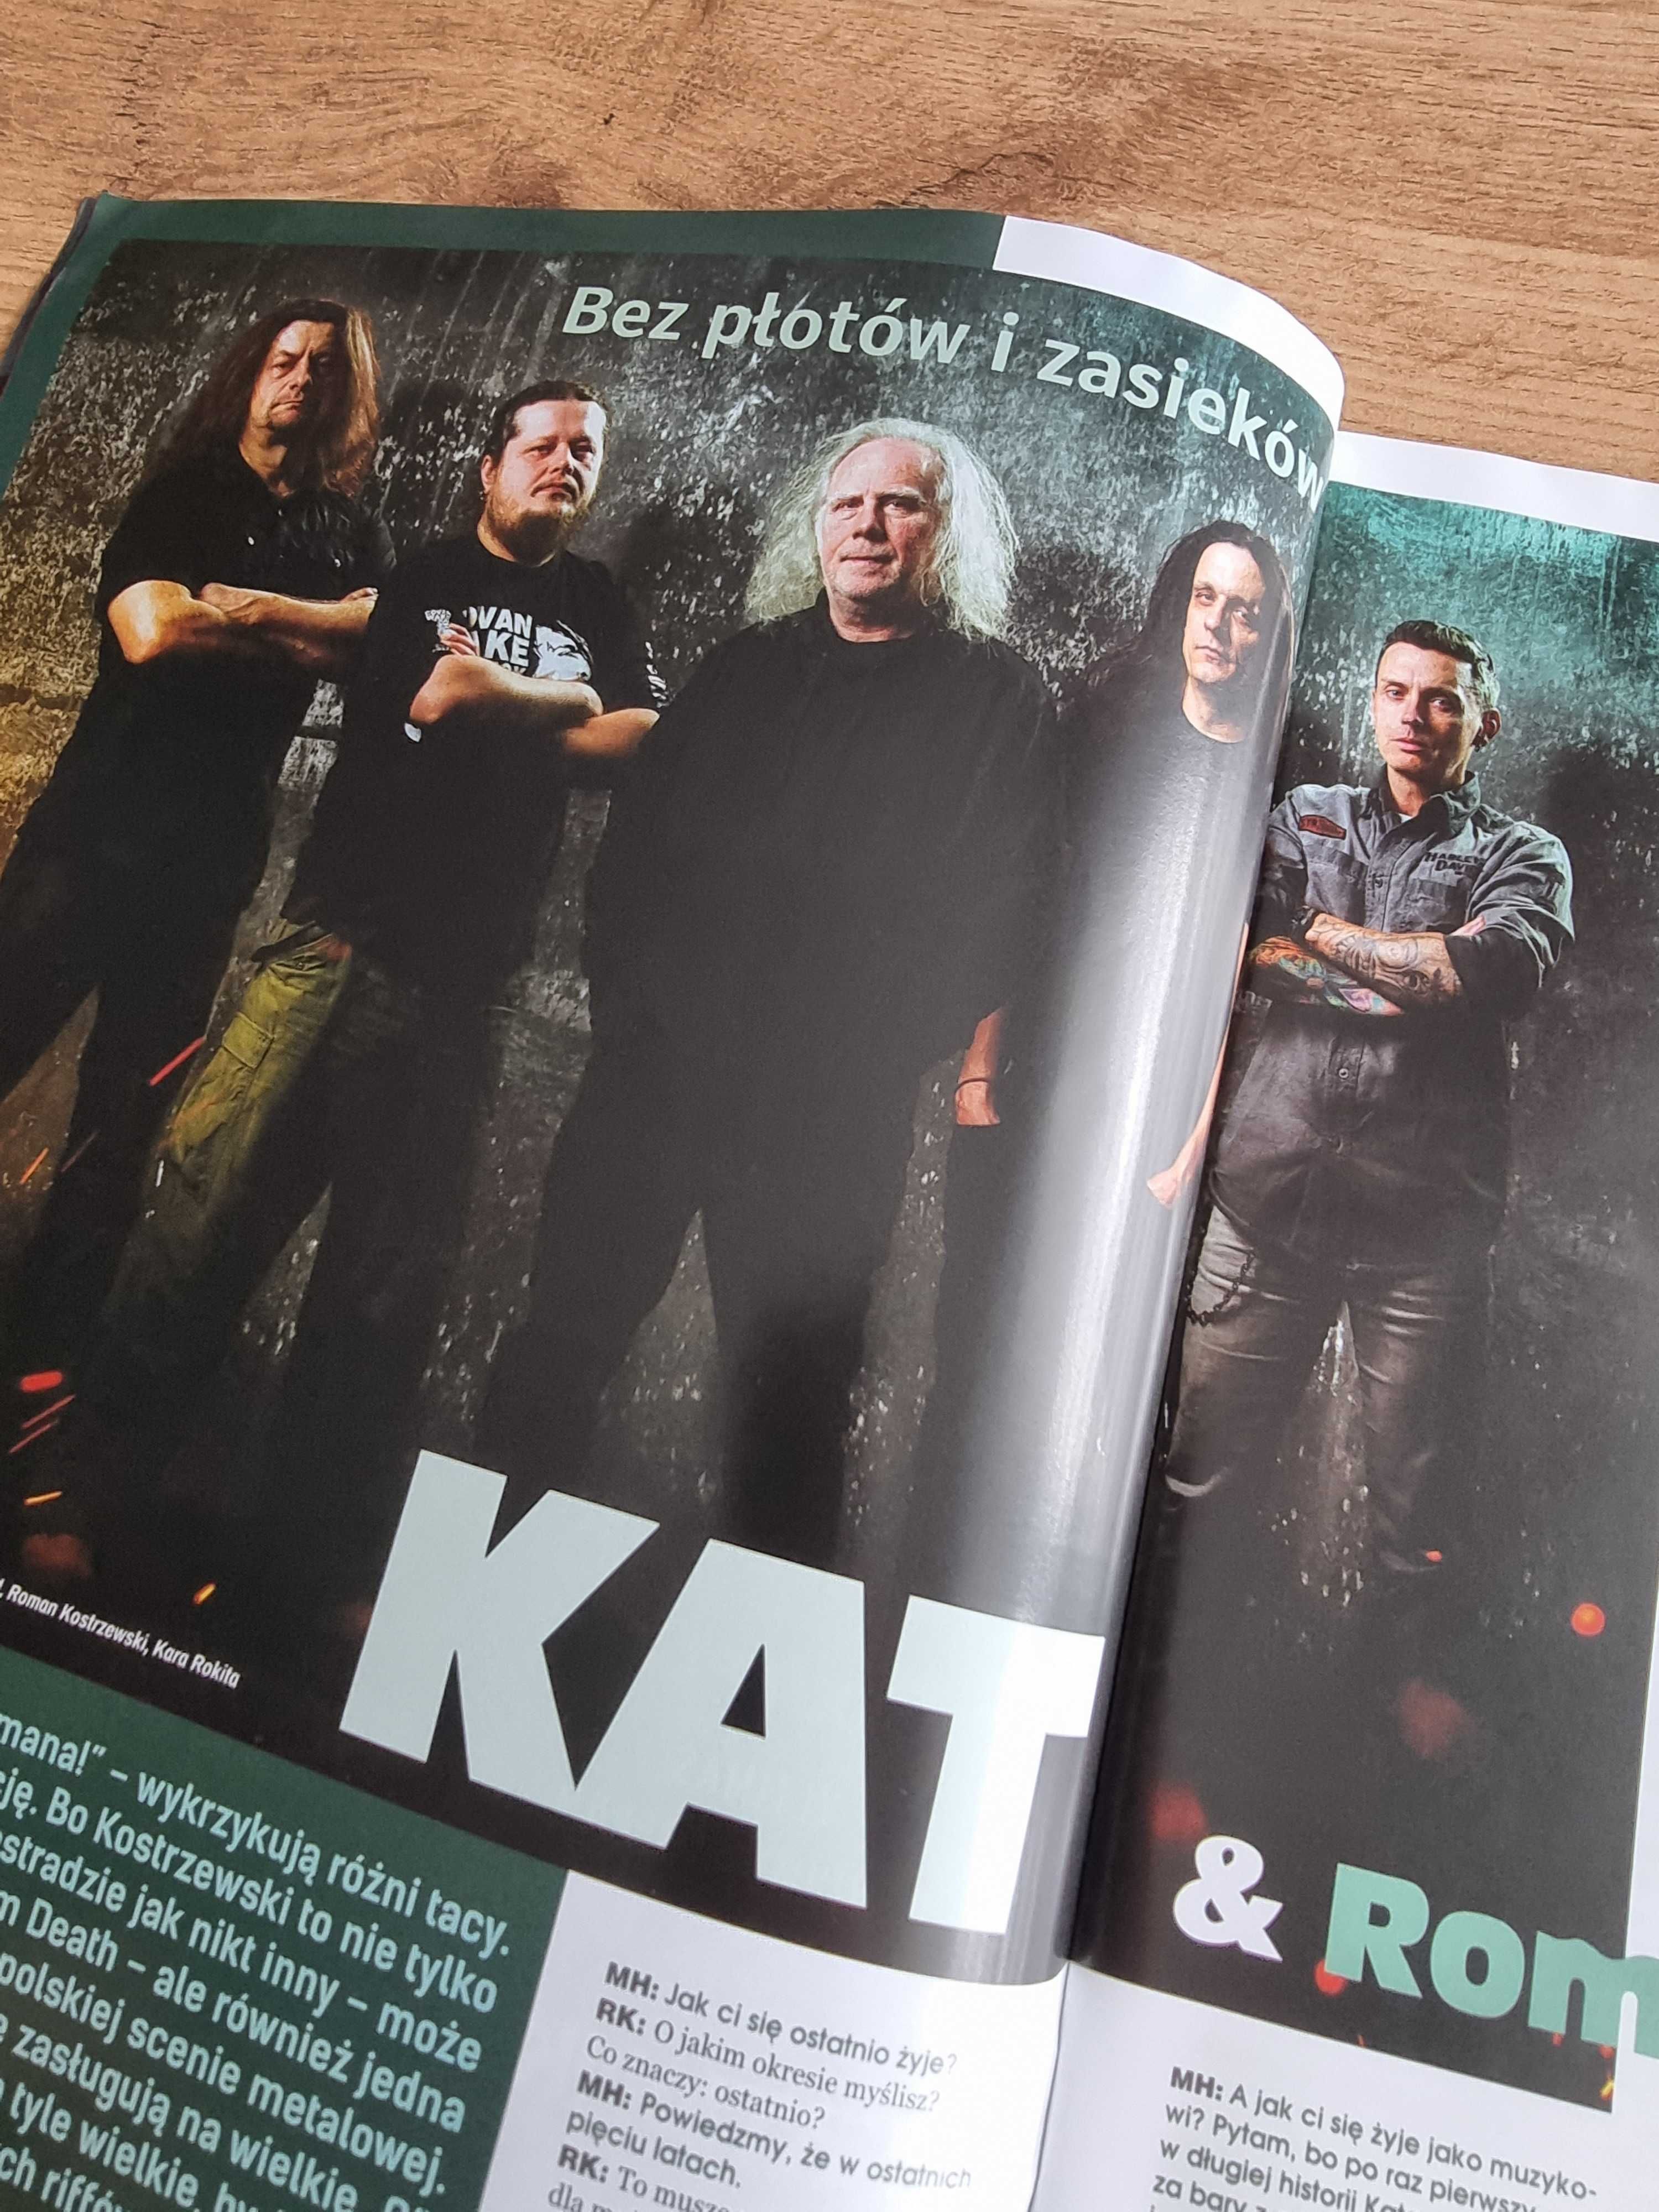 Metal Hammer 2019 - KAT, Plakaty XL: Ghost, Helloween